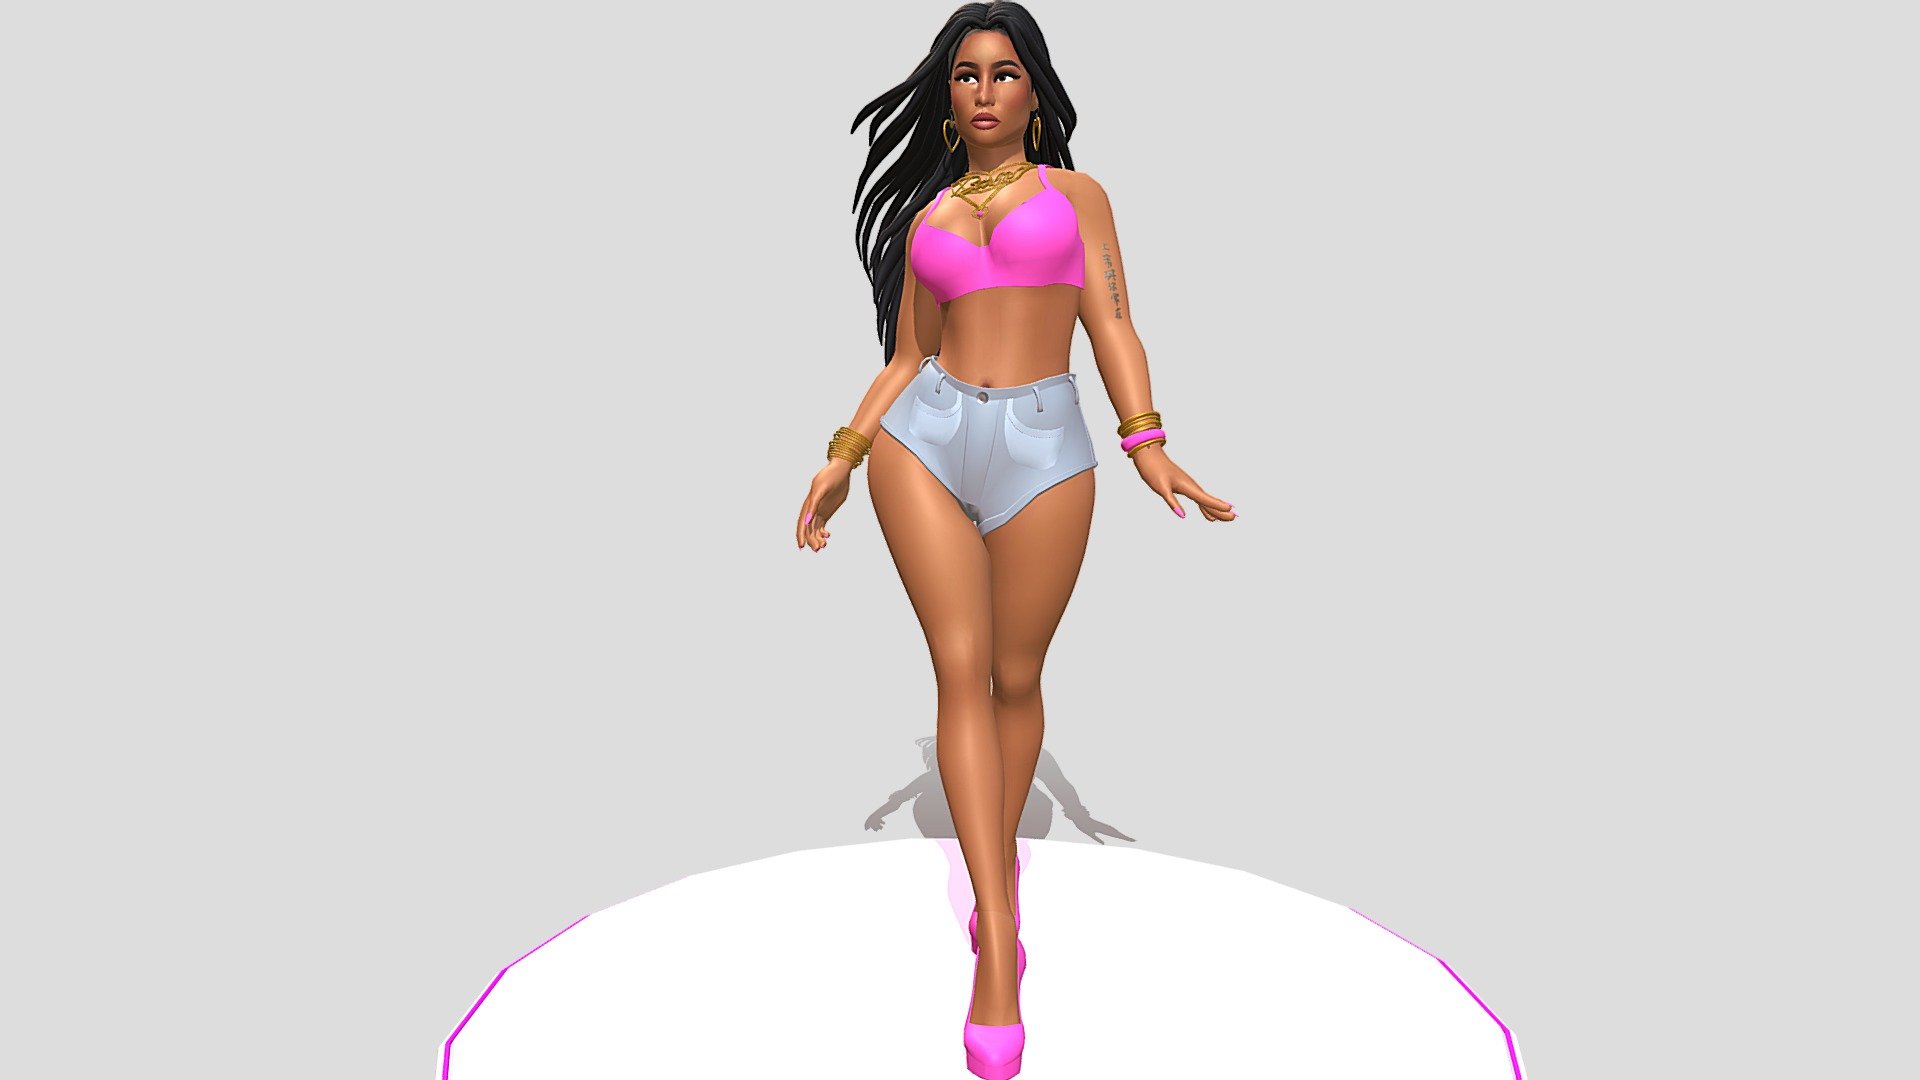 Stylized Nicki Minaj - 3D model by Mario Hoevel (@MarioHoevel) 3d model